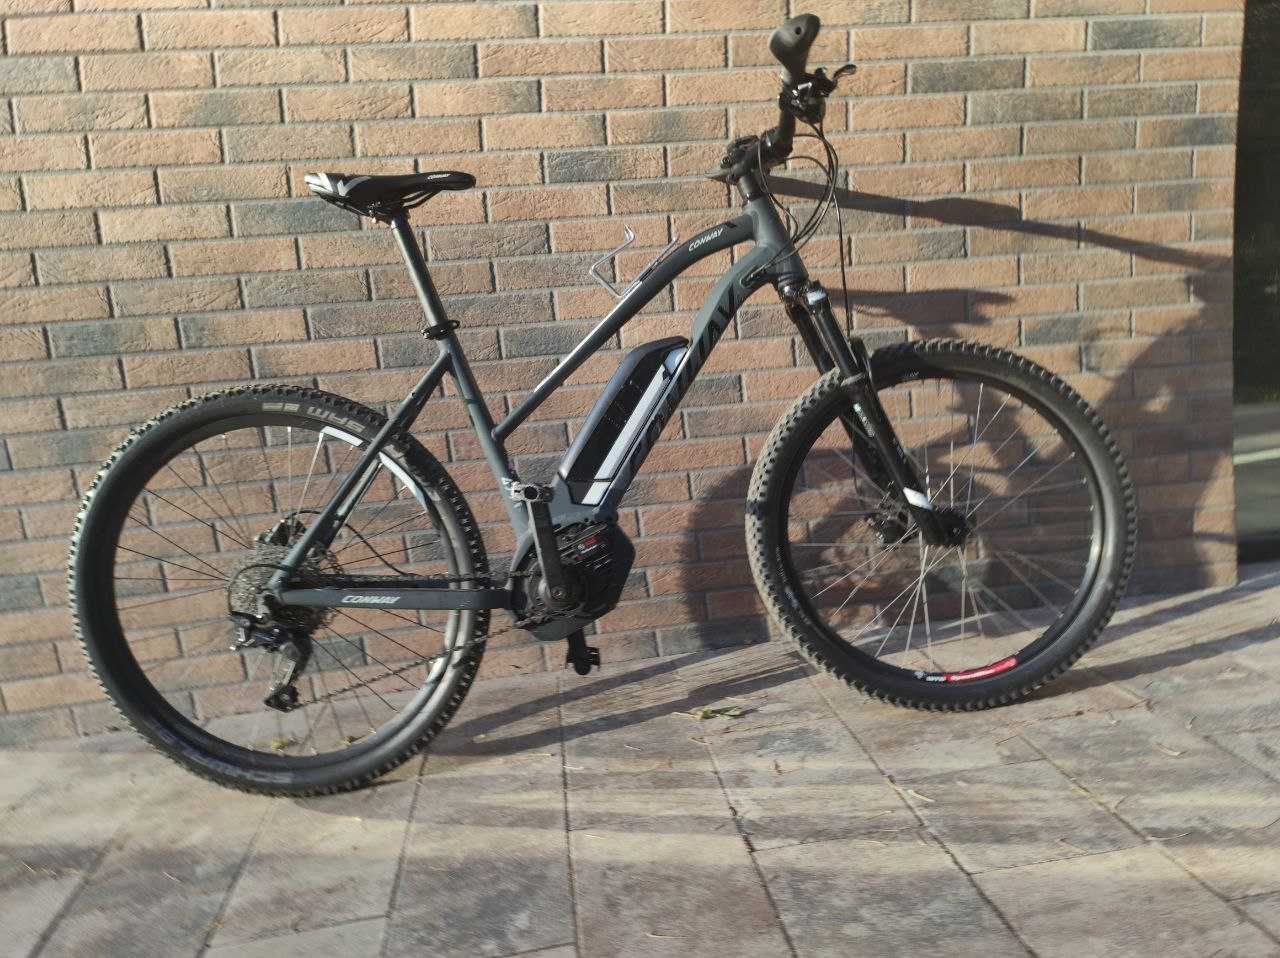 Горный электровелосипед E-bike CONWAY, MODELLJAHR 2019